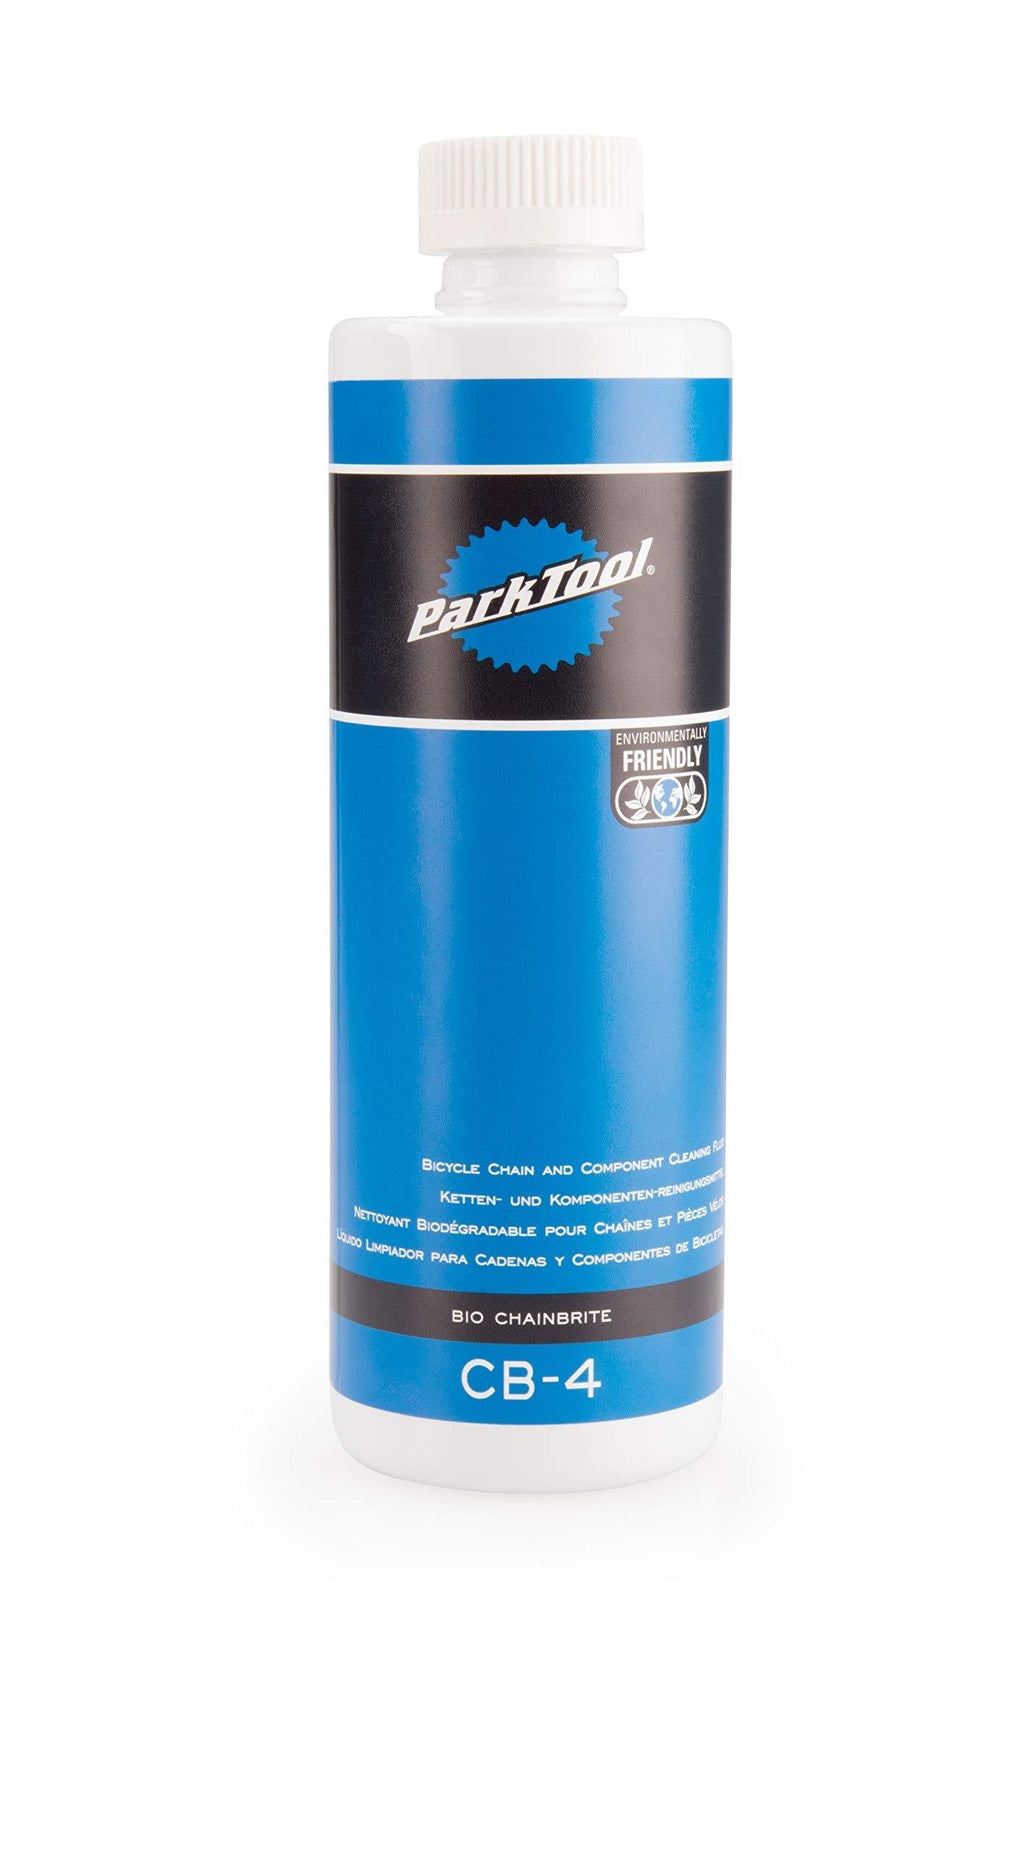 Park Tool CB-4 Bio Chainbrite Bicycle Chain & Component Cleaning Fluid - 16 oz. Bottle - BeesActive Australia